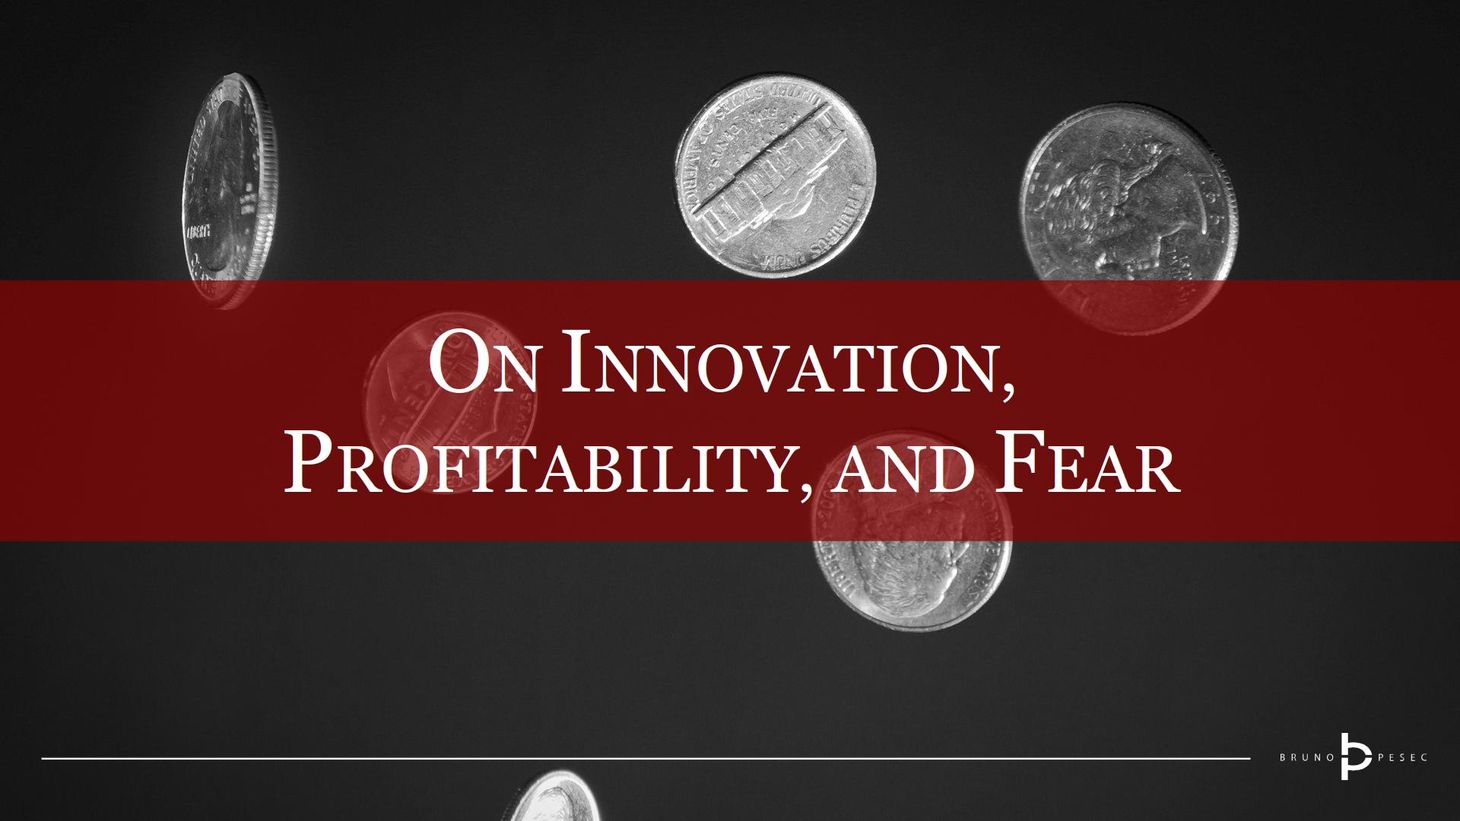 On innovation, profitability, and fear